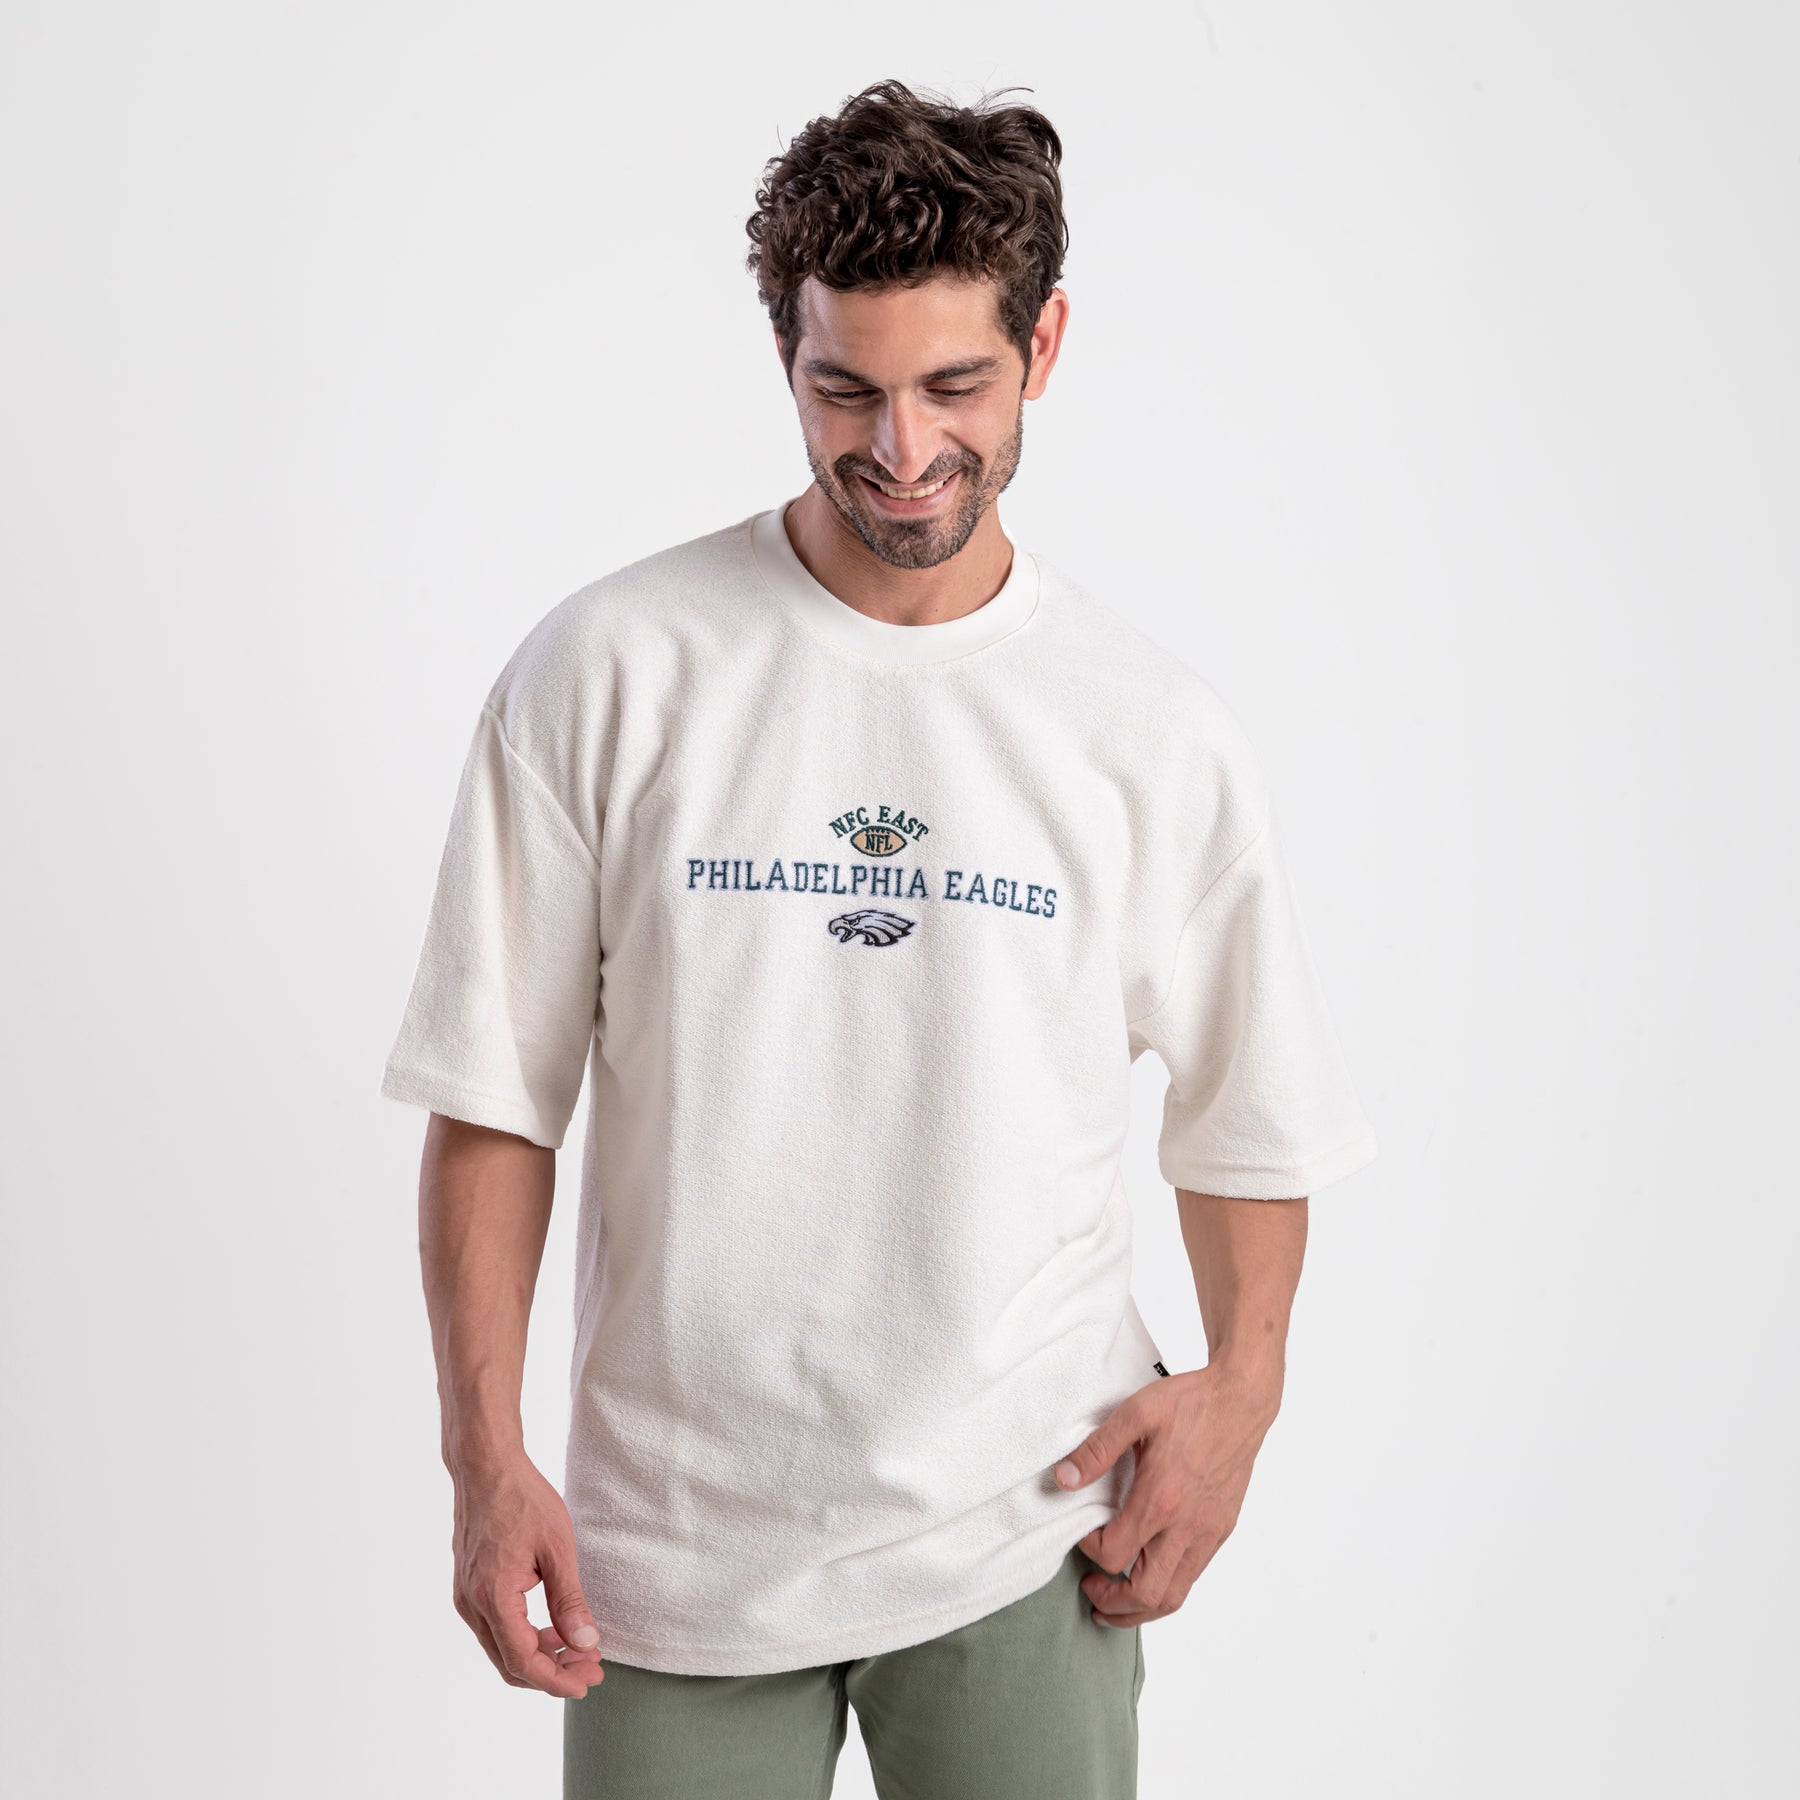 Men's White Essential T-shirt